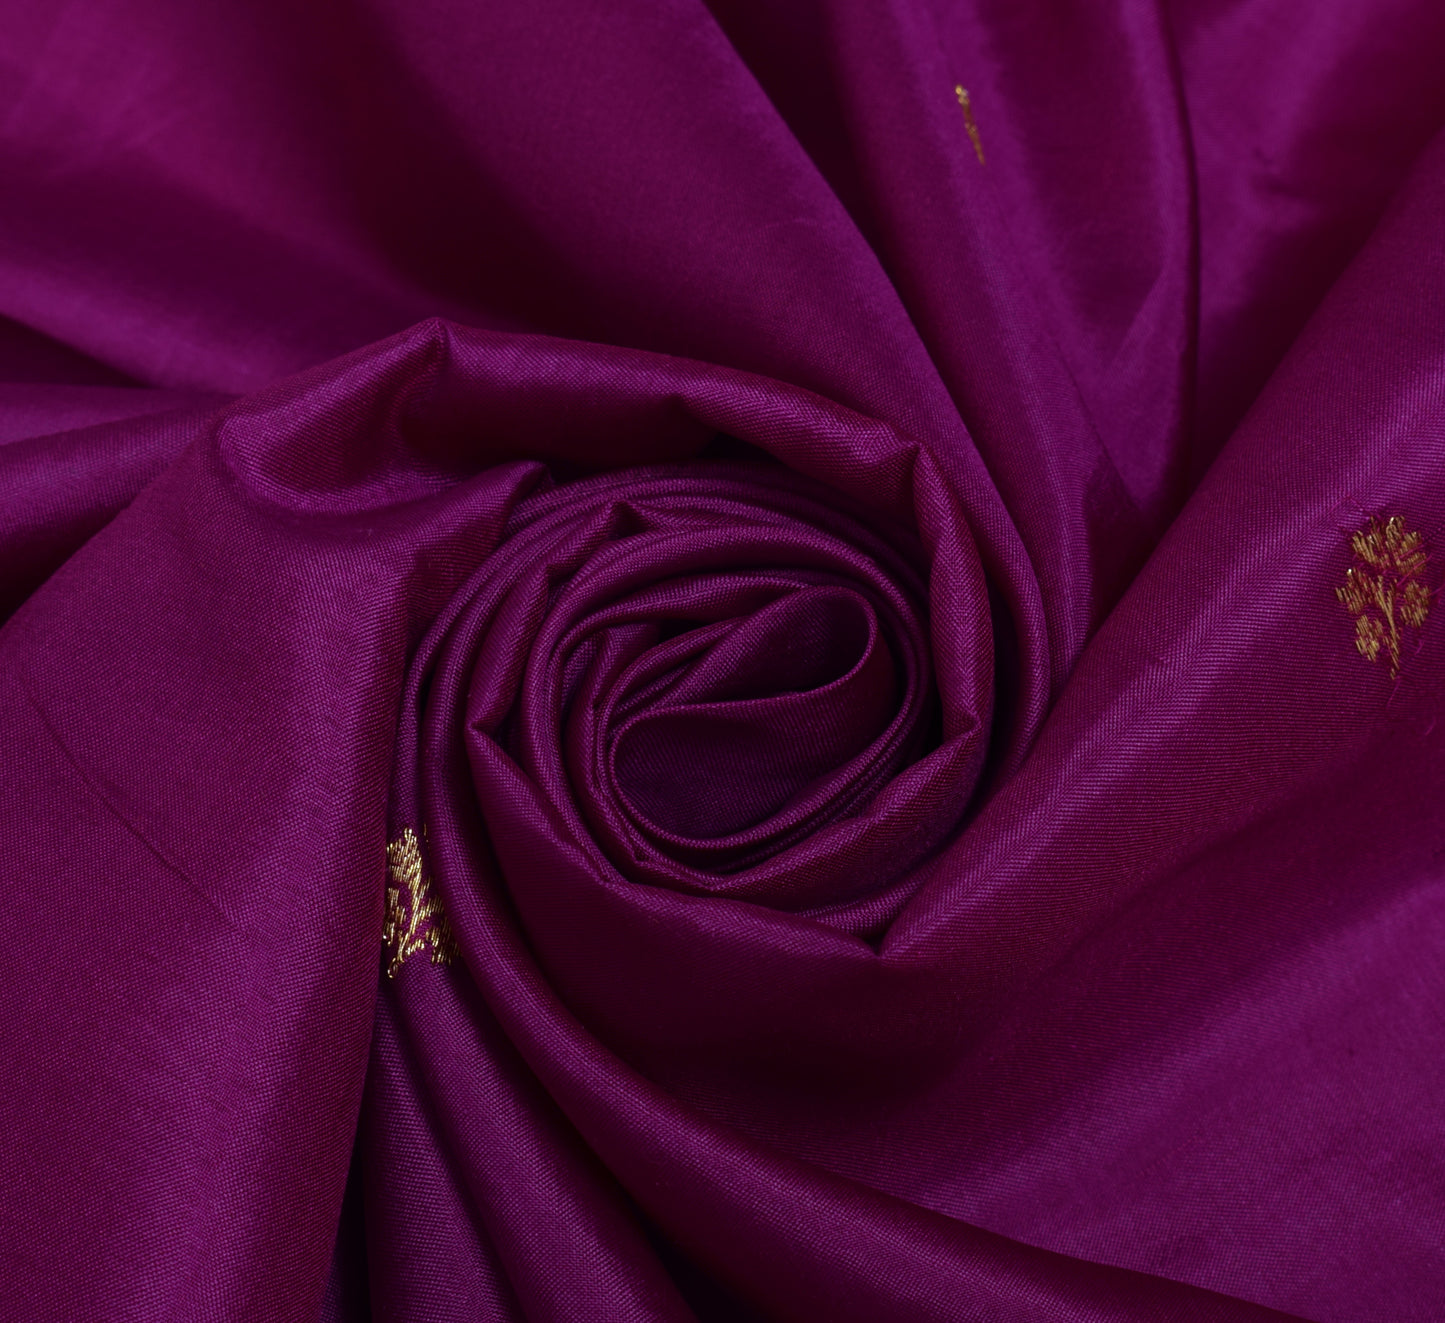 Sushila Vintage Purple Silk Sari Remnant Scrap Multi Purpose Woven Craft Fabric